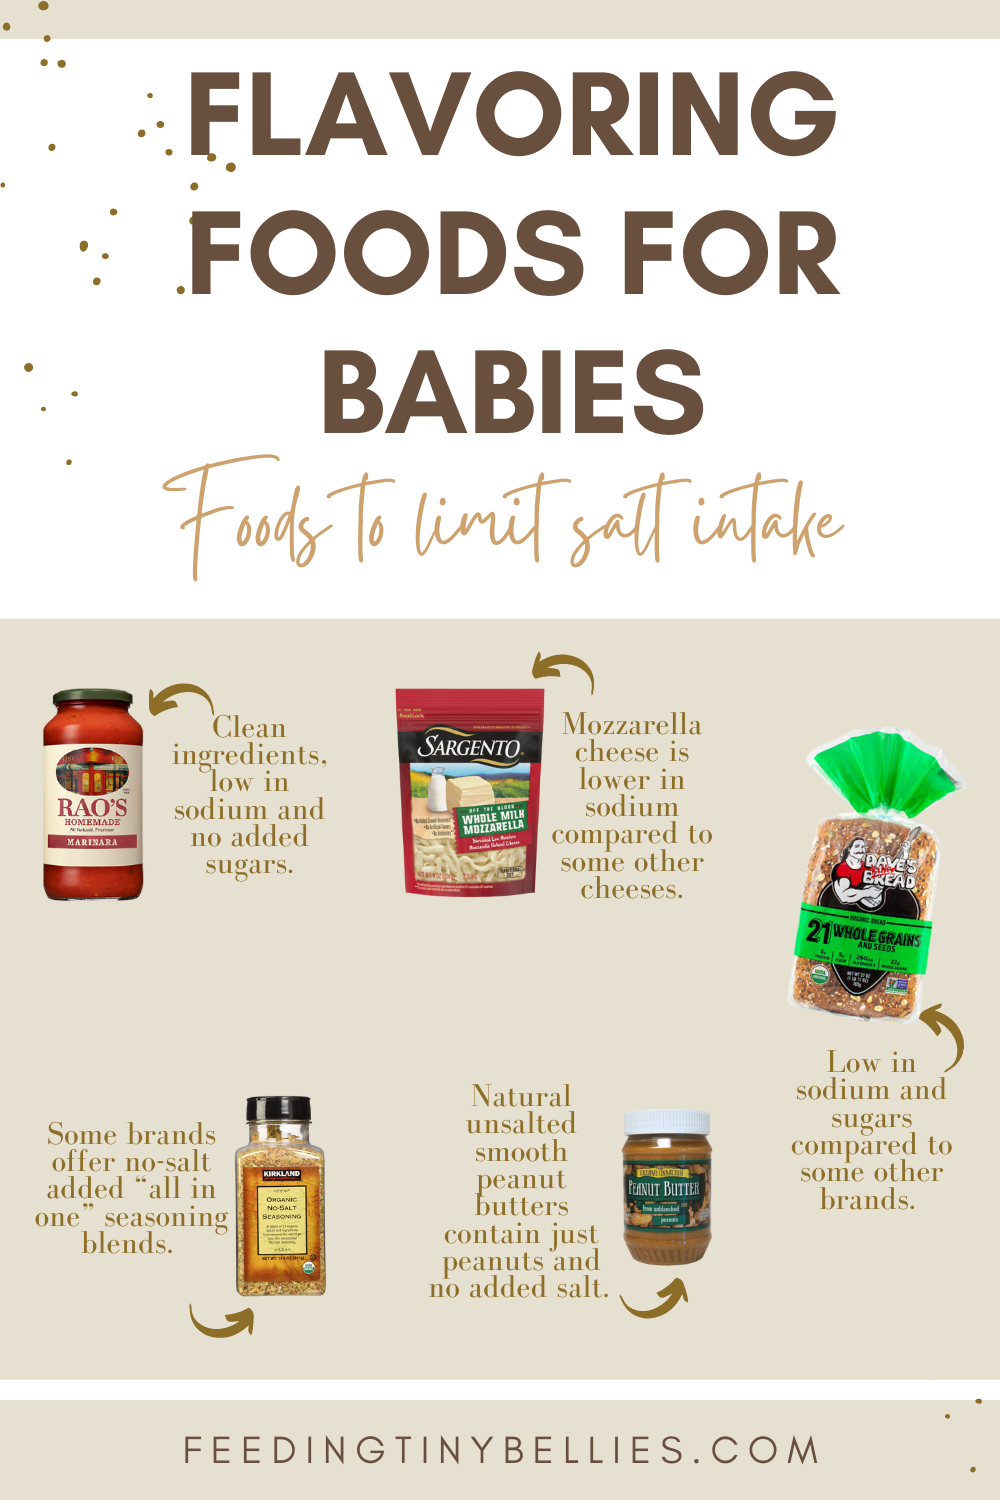 Flavoring foods for babies - Foods to limi salt intake